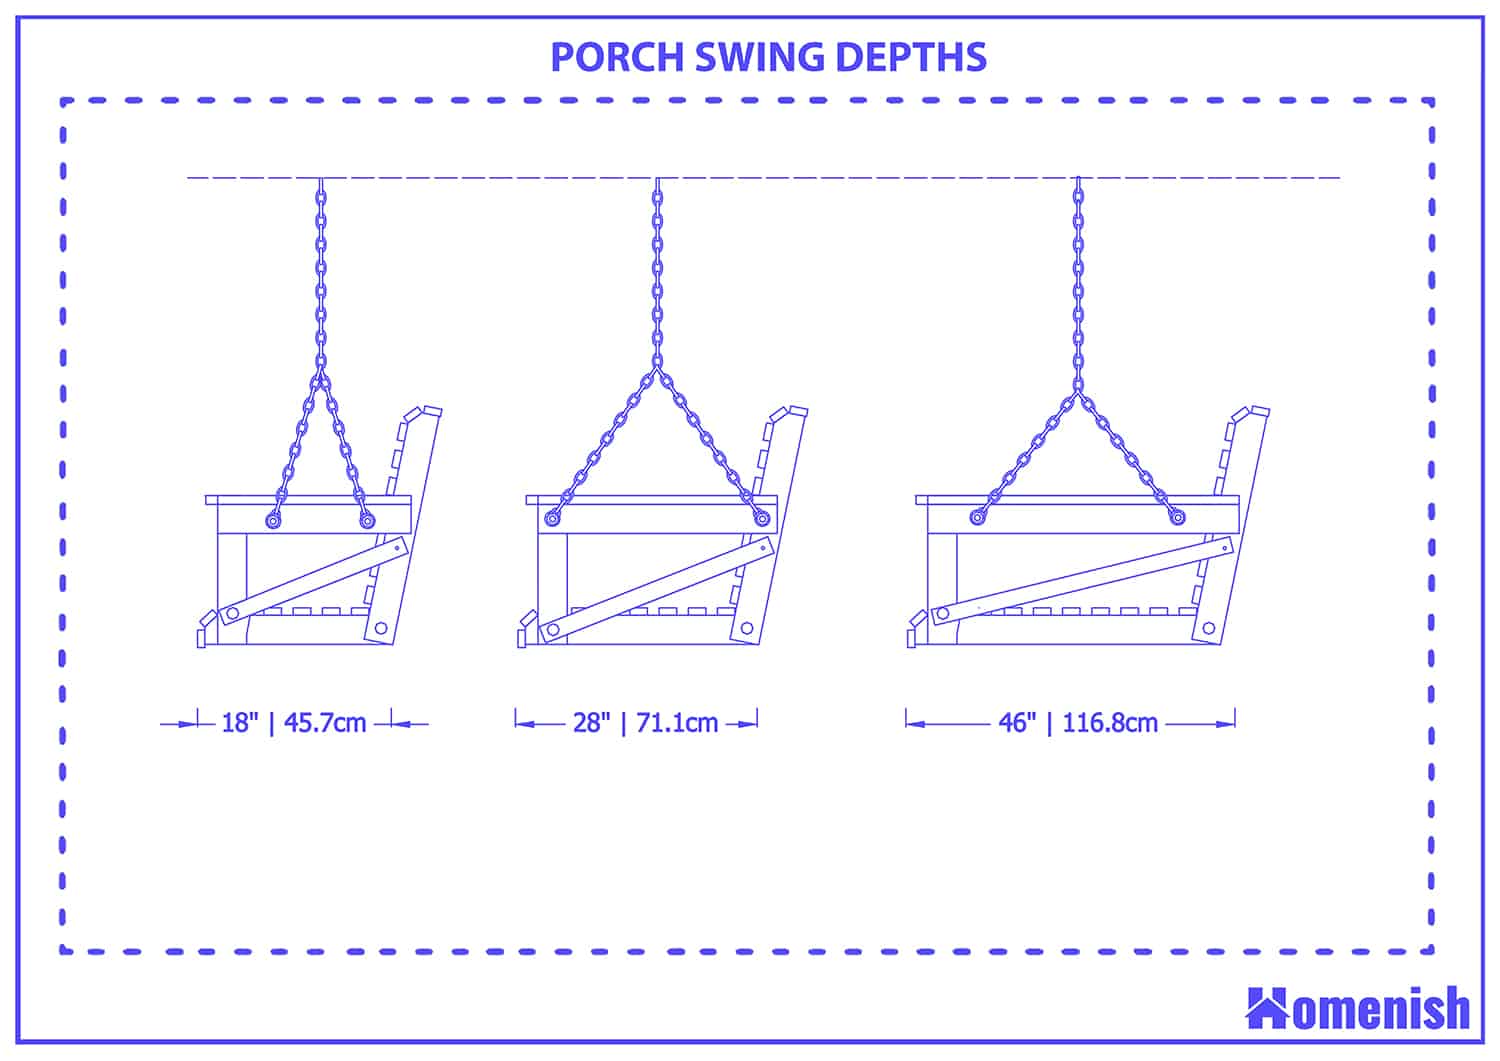 Porch swing depths